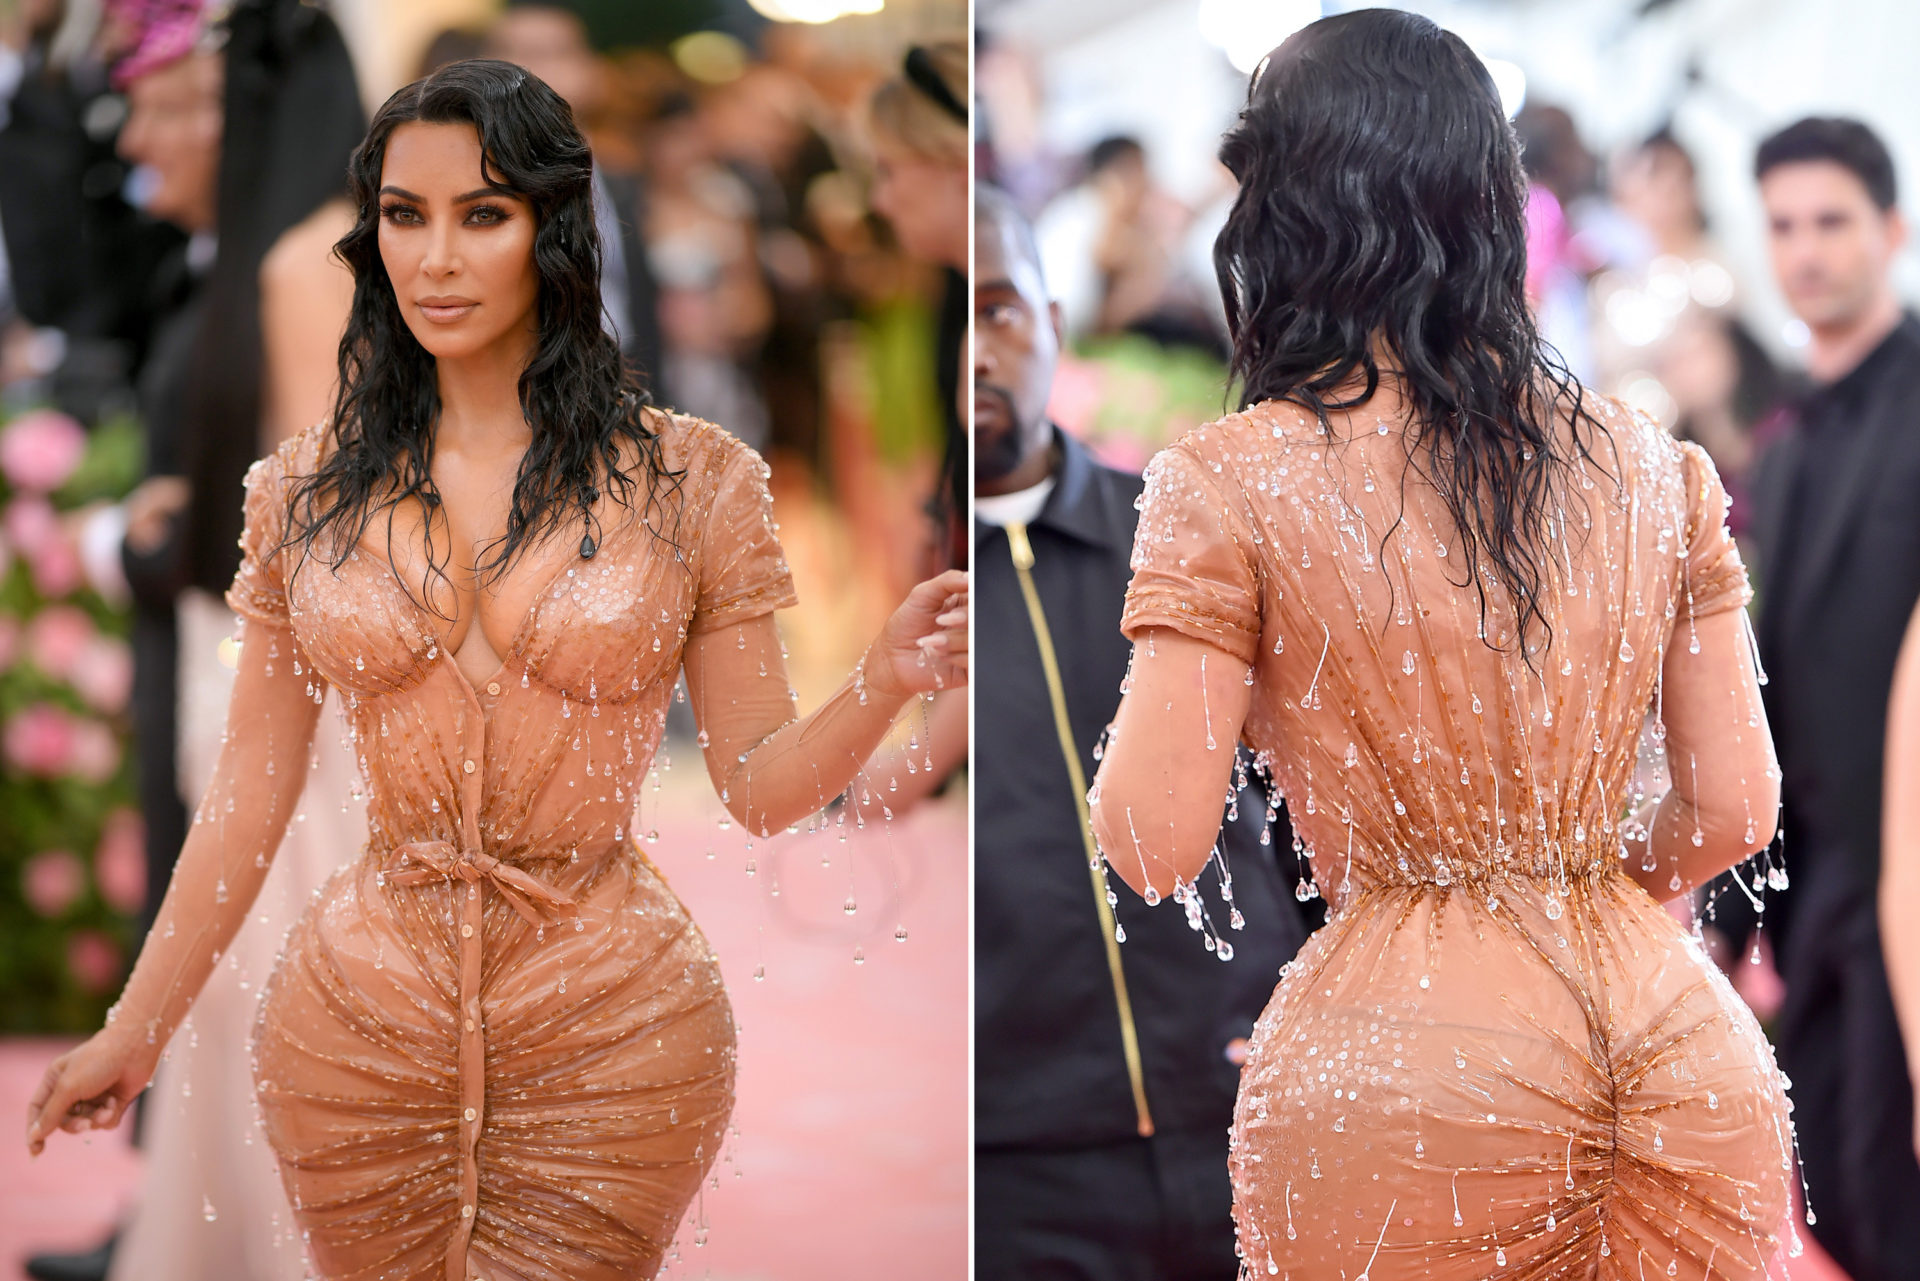 Kim Kardashian Opens up About Plastic Surgery.